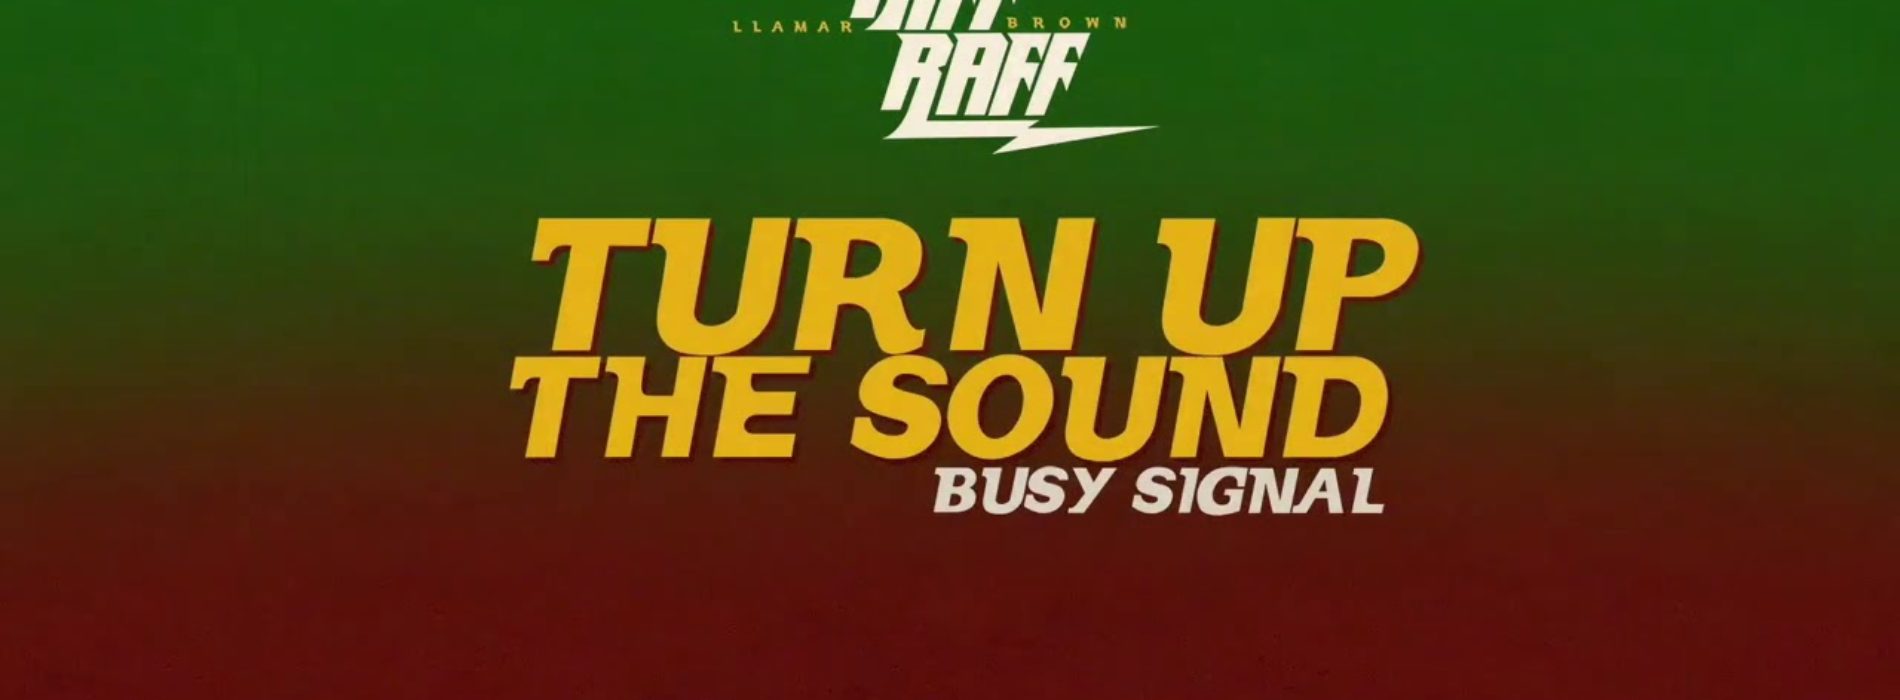 Busy Signal, Llamar « Riff Raff » Brown – Turn up the Sound [Official Audio] – Août 2020